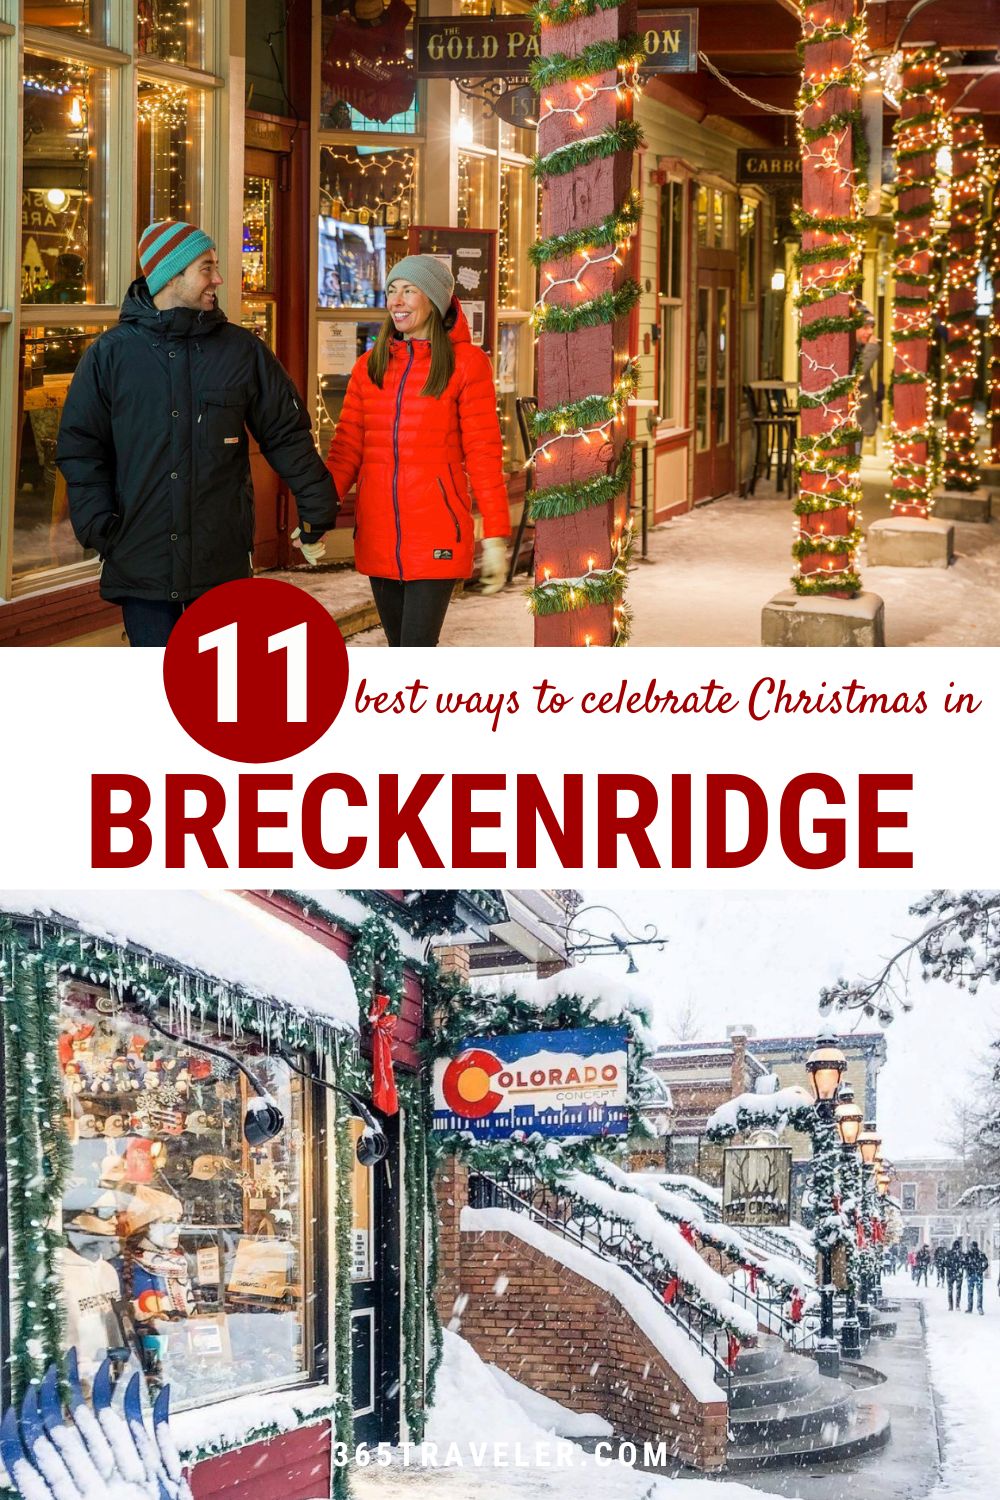 Breckenridge Colorado Christmas: 11 Best Ways To Celebrate